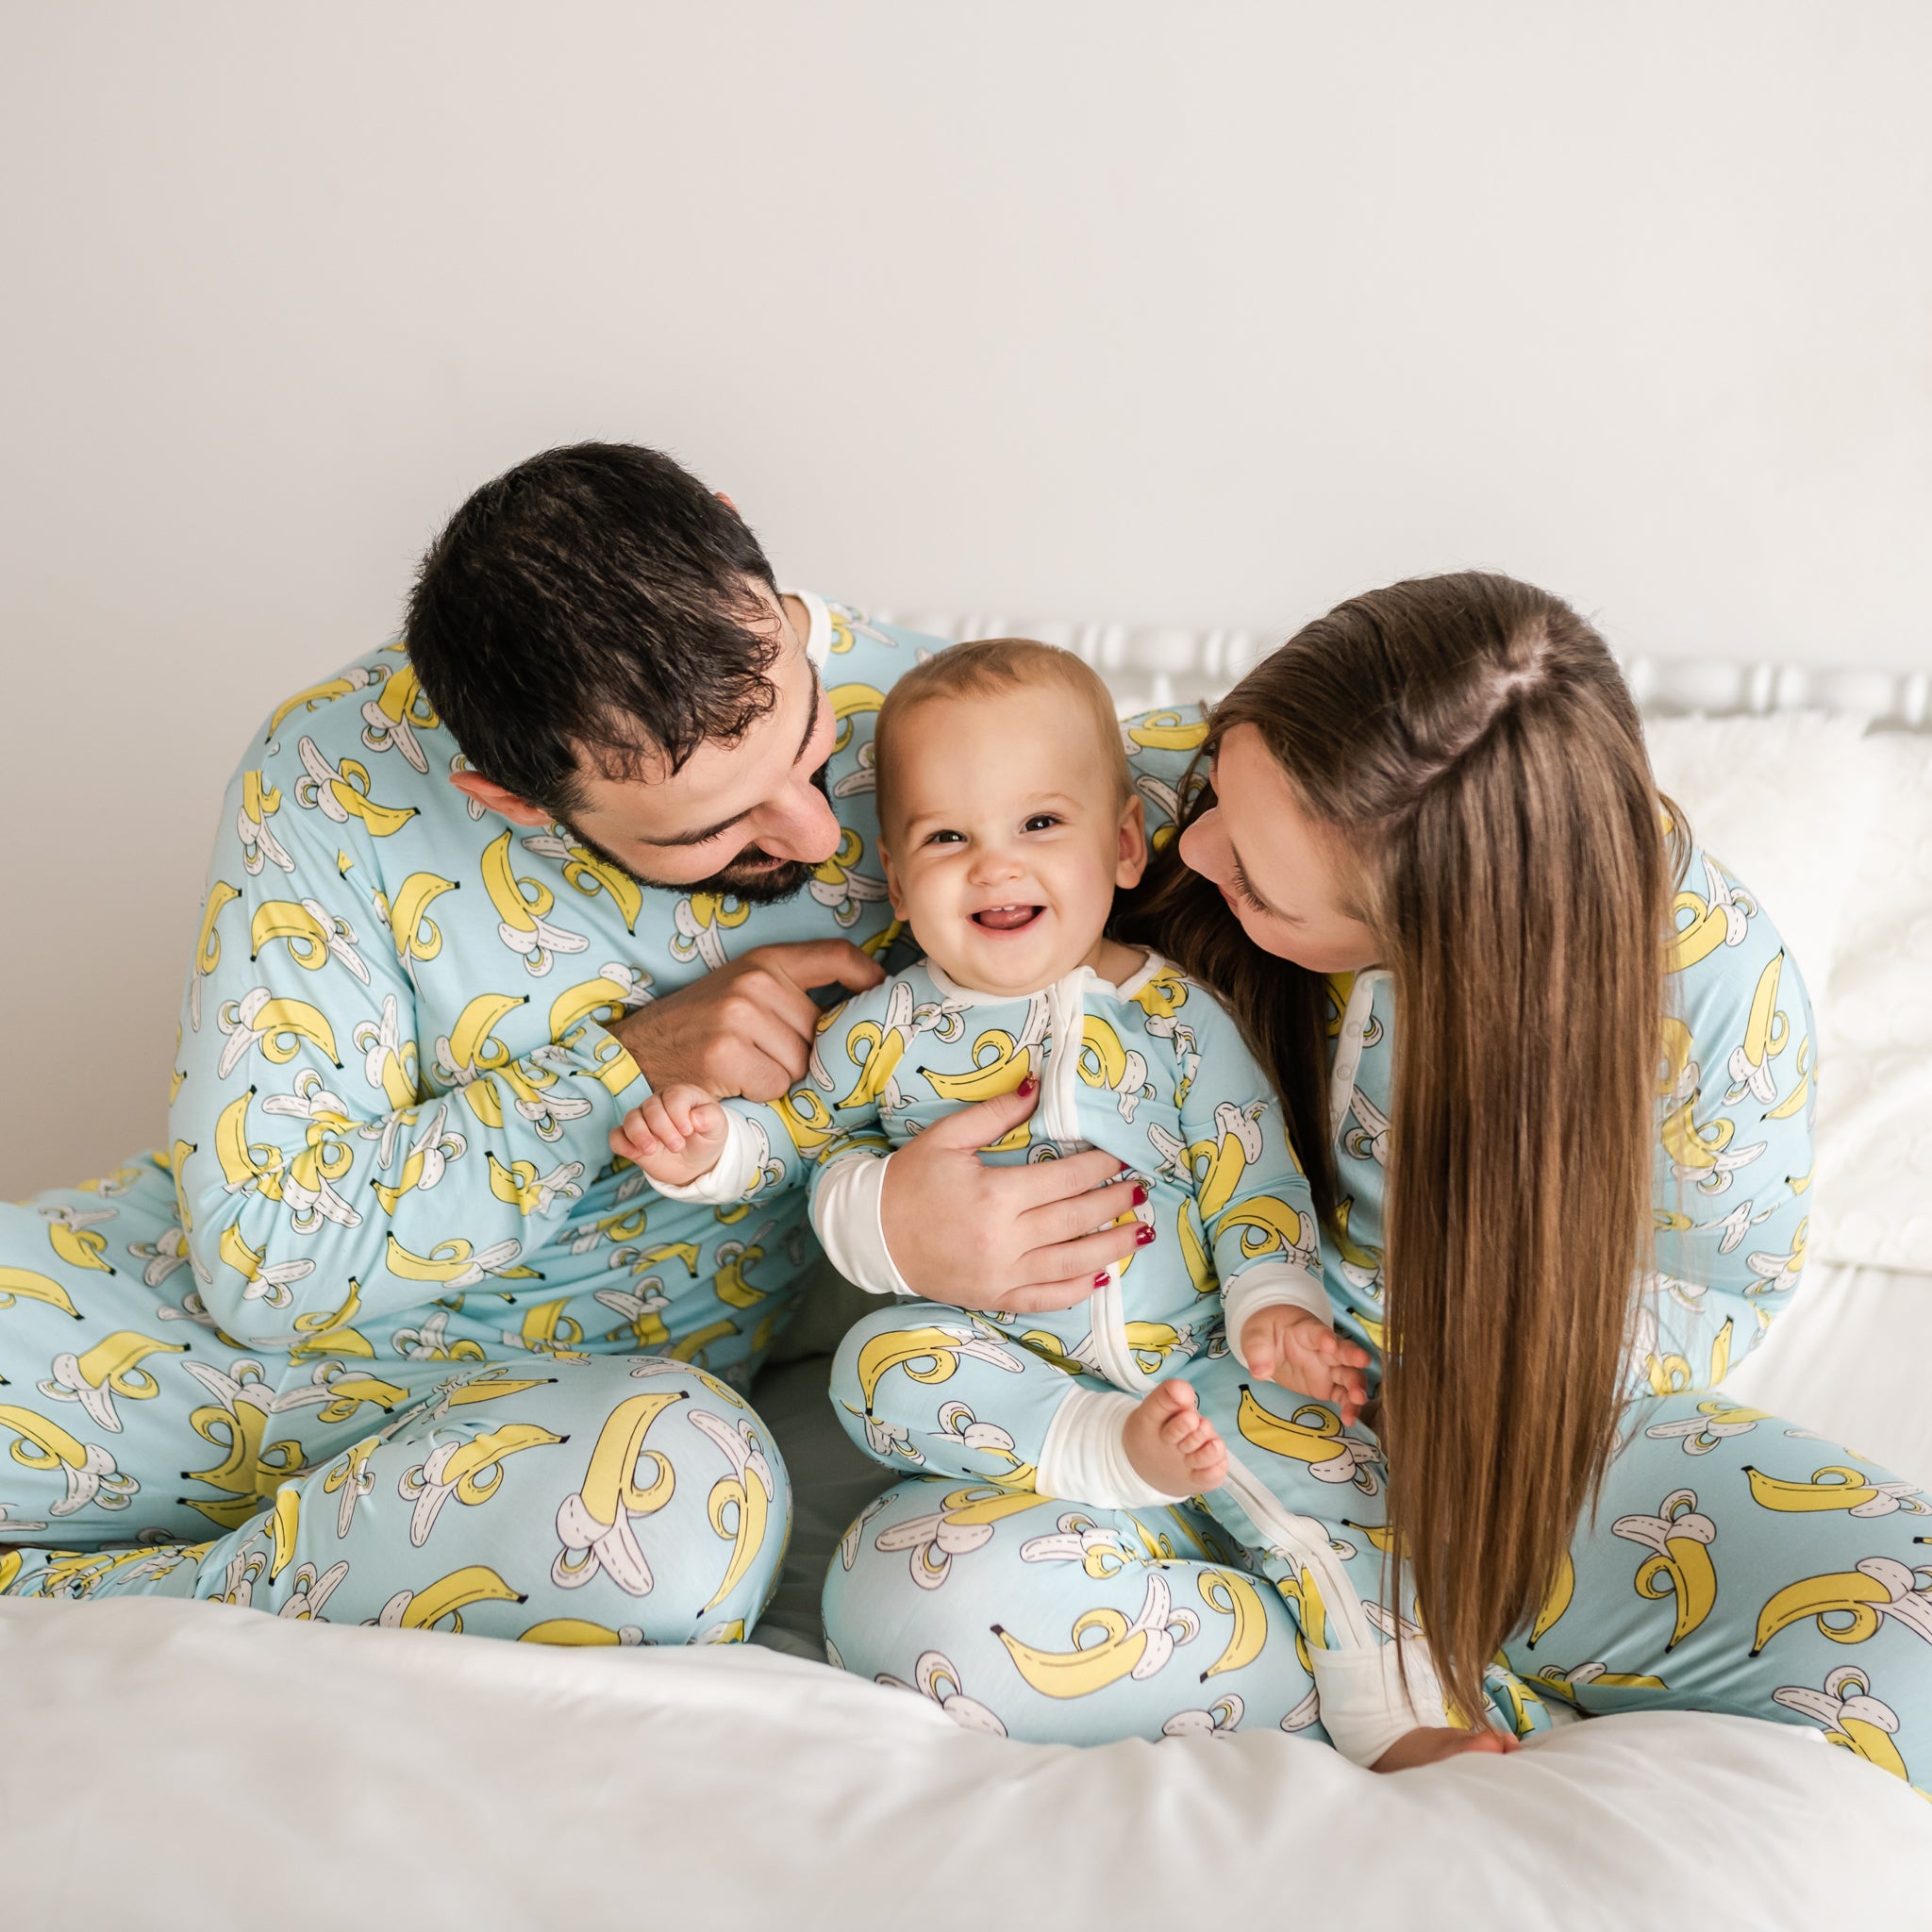 family wearing matching pajamas with bananas 